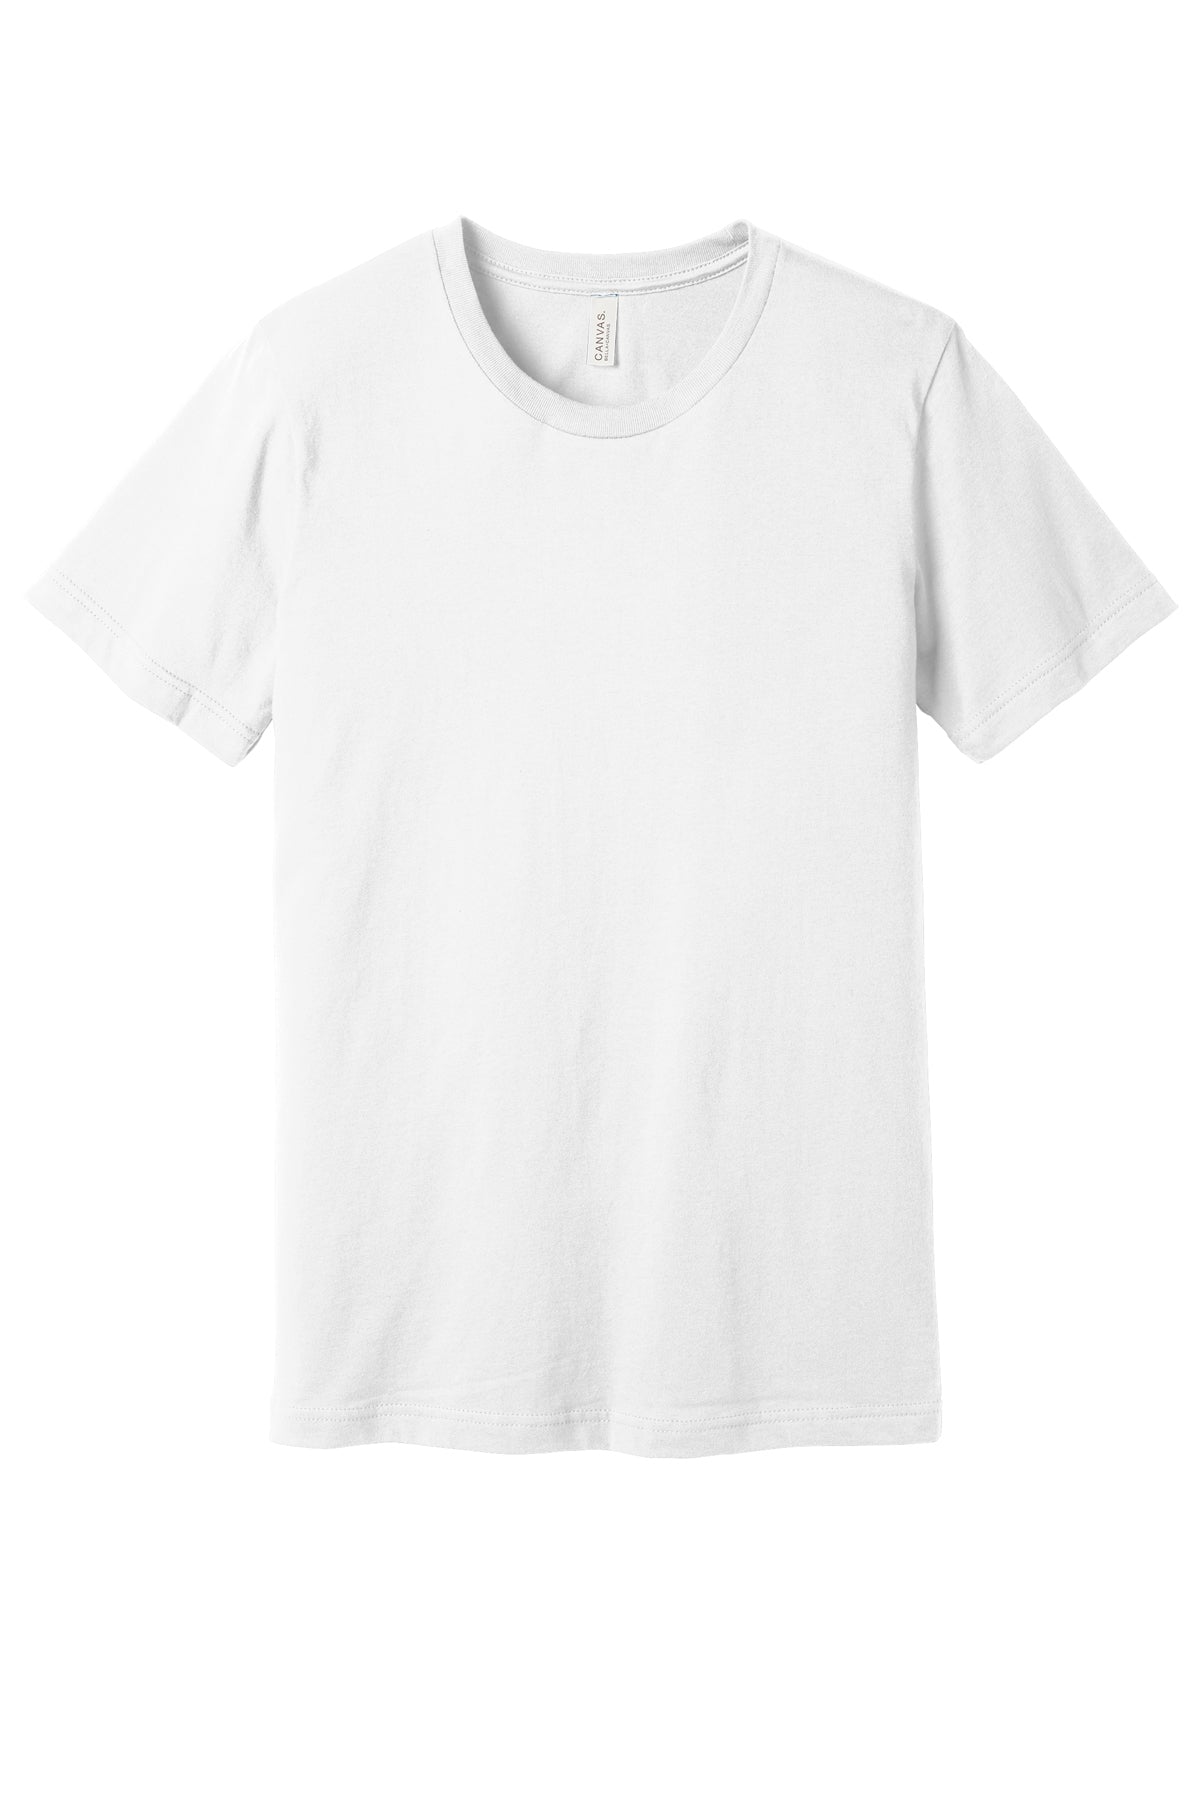 Bella Canvas Mens/Unisex Cotton Short Sleeve Shirts White